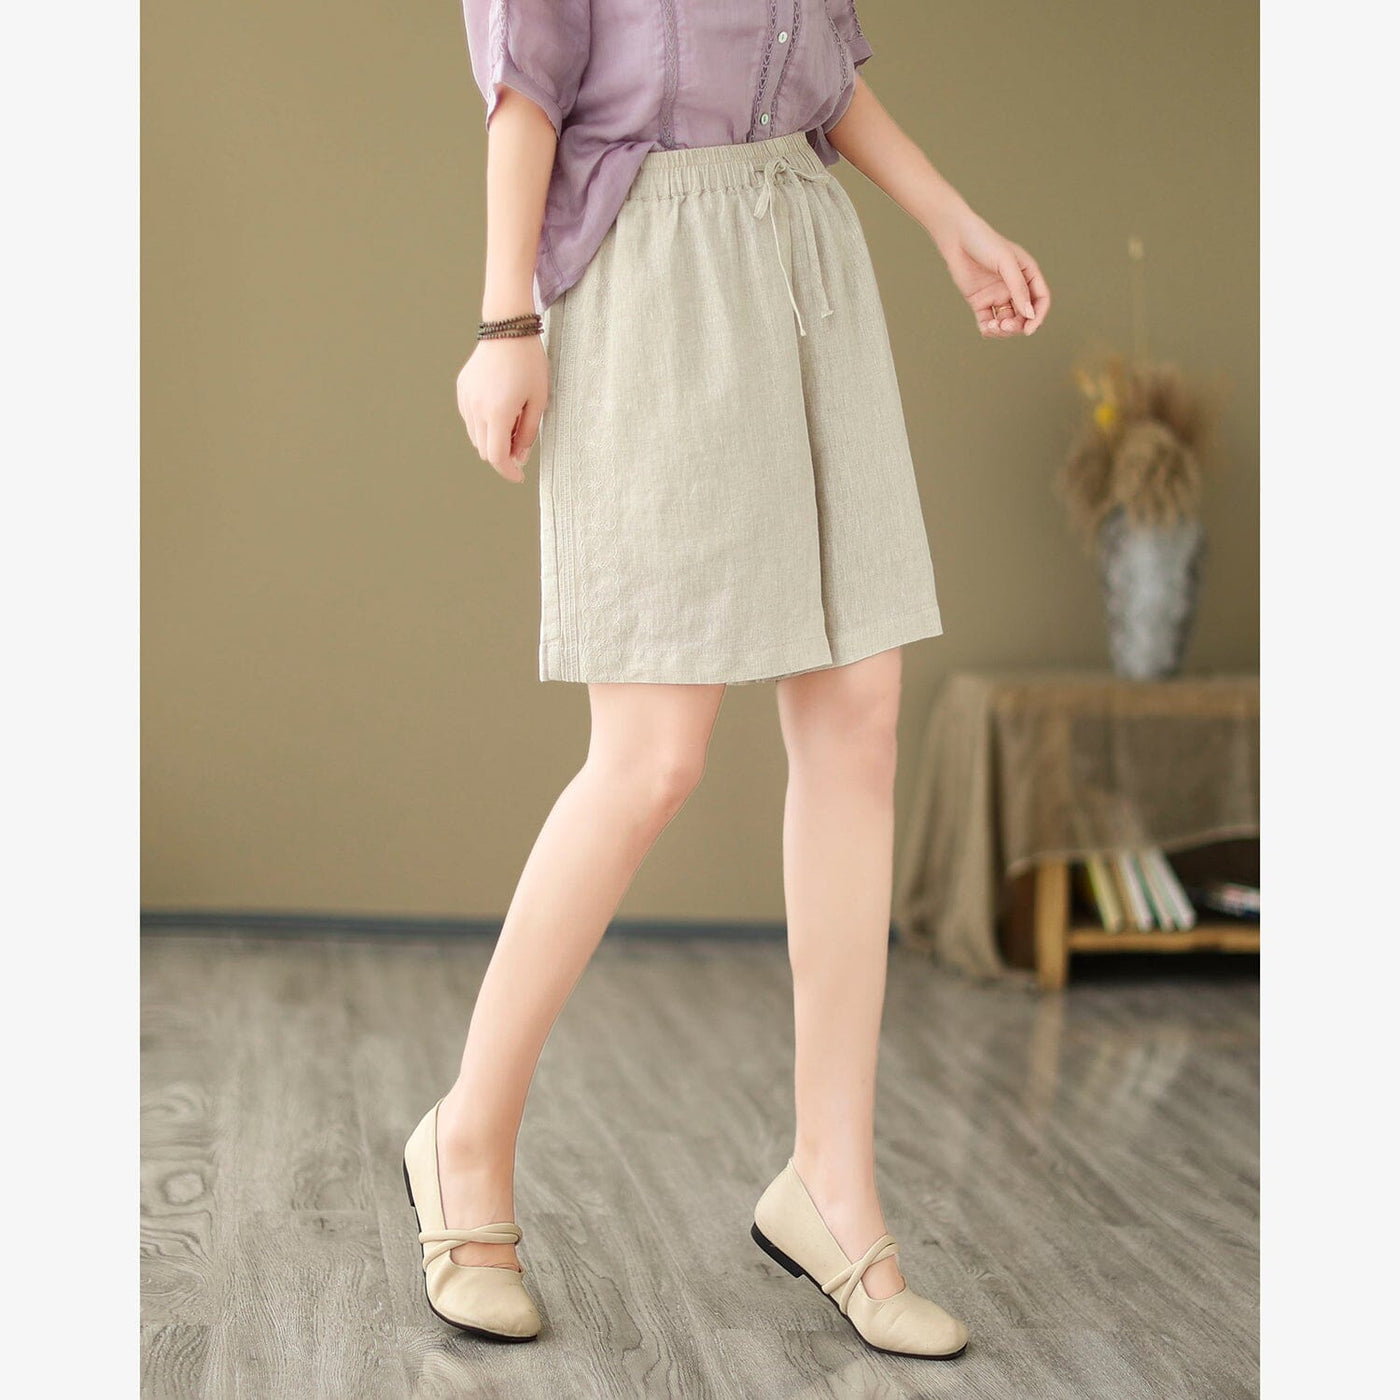 Summer Casual Loose Minimalist Linen Shorts